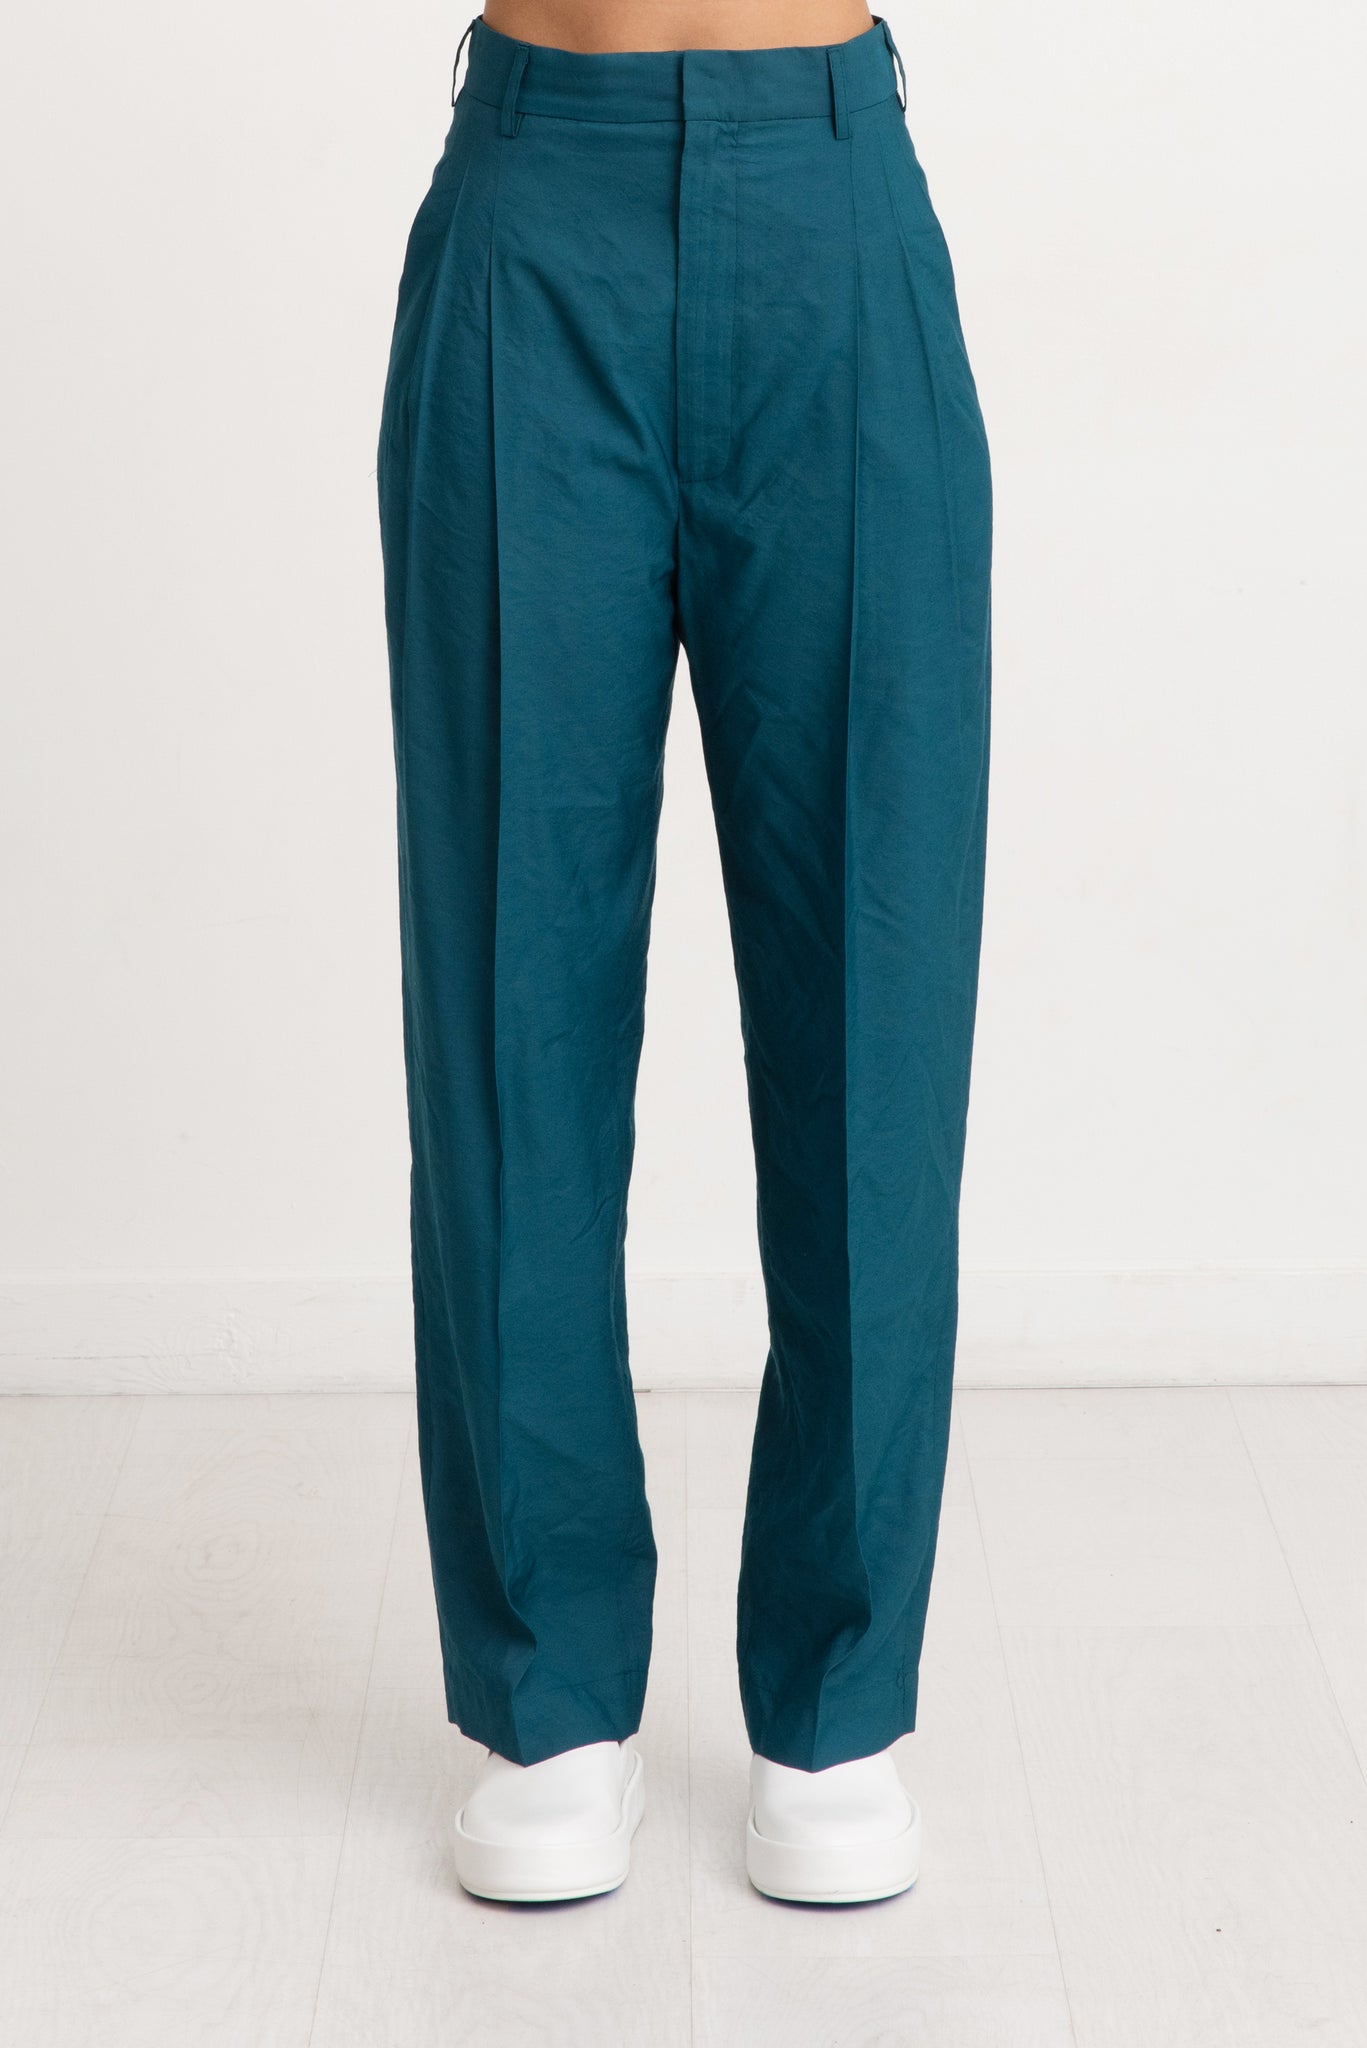 HACHE - Man Trouser, Dark Turquoise